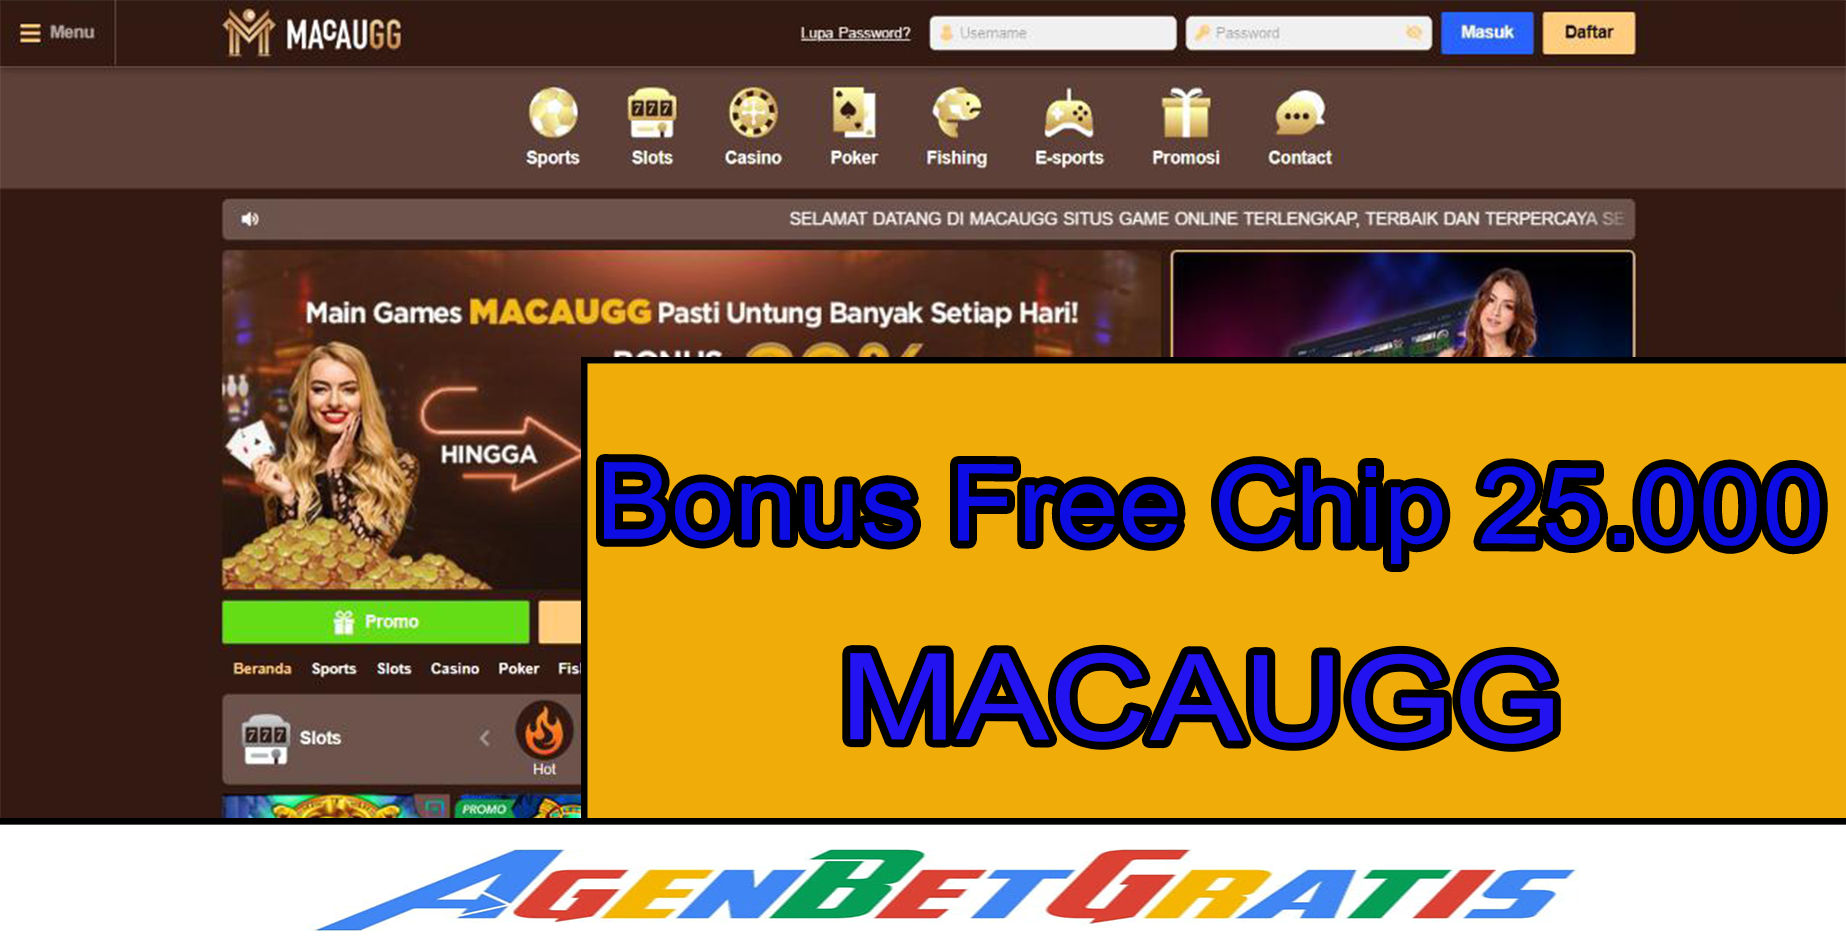 MACAUGG - Bonus Free Chip 25.000